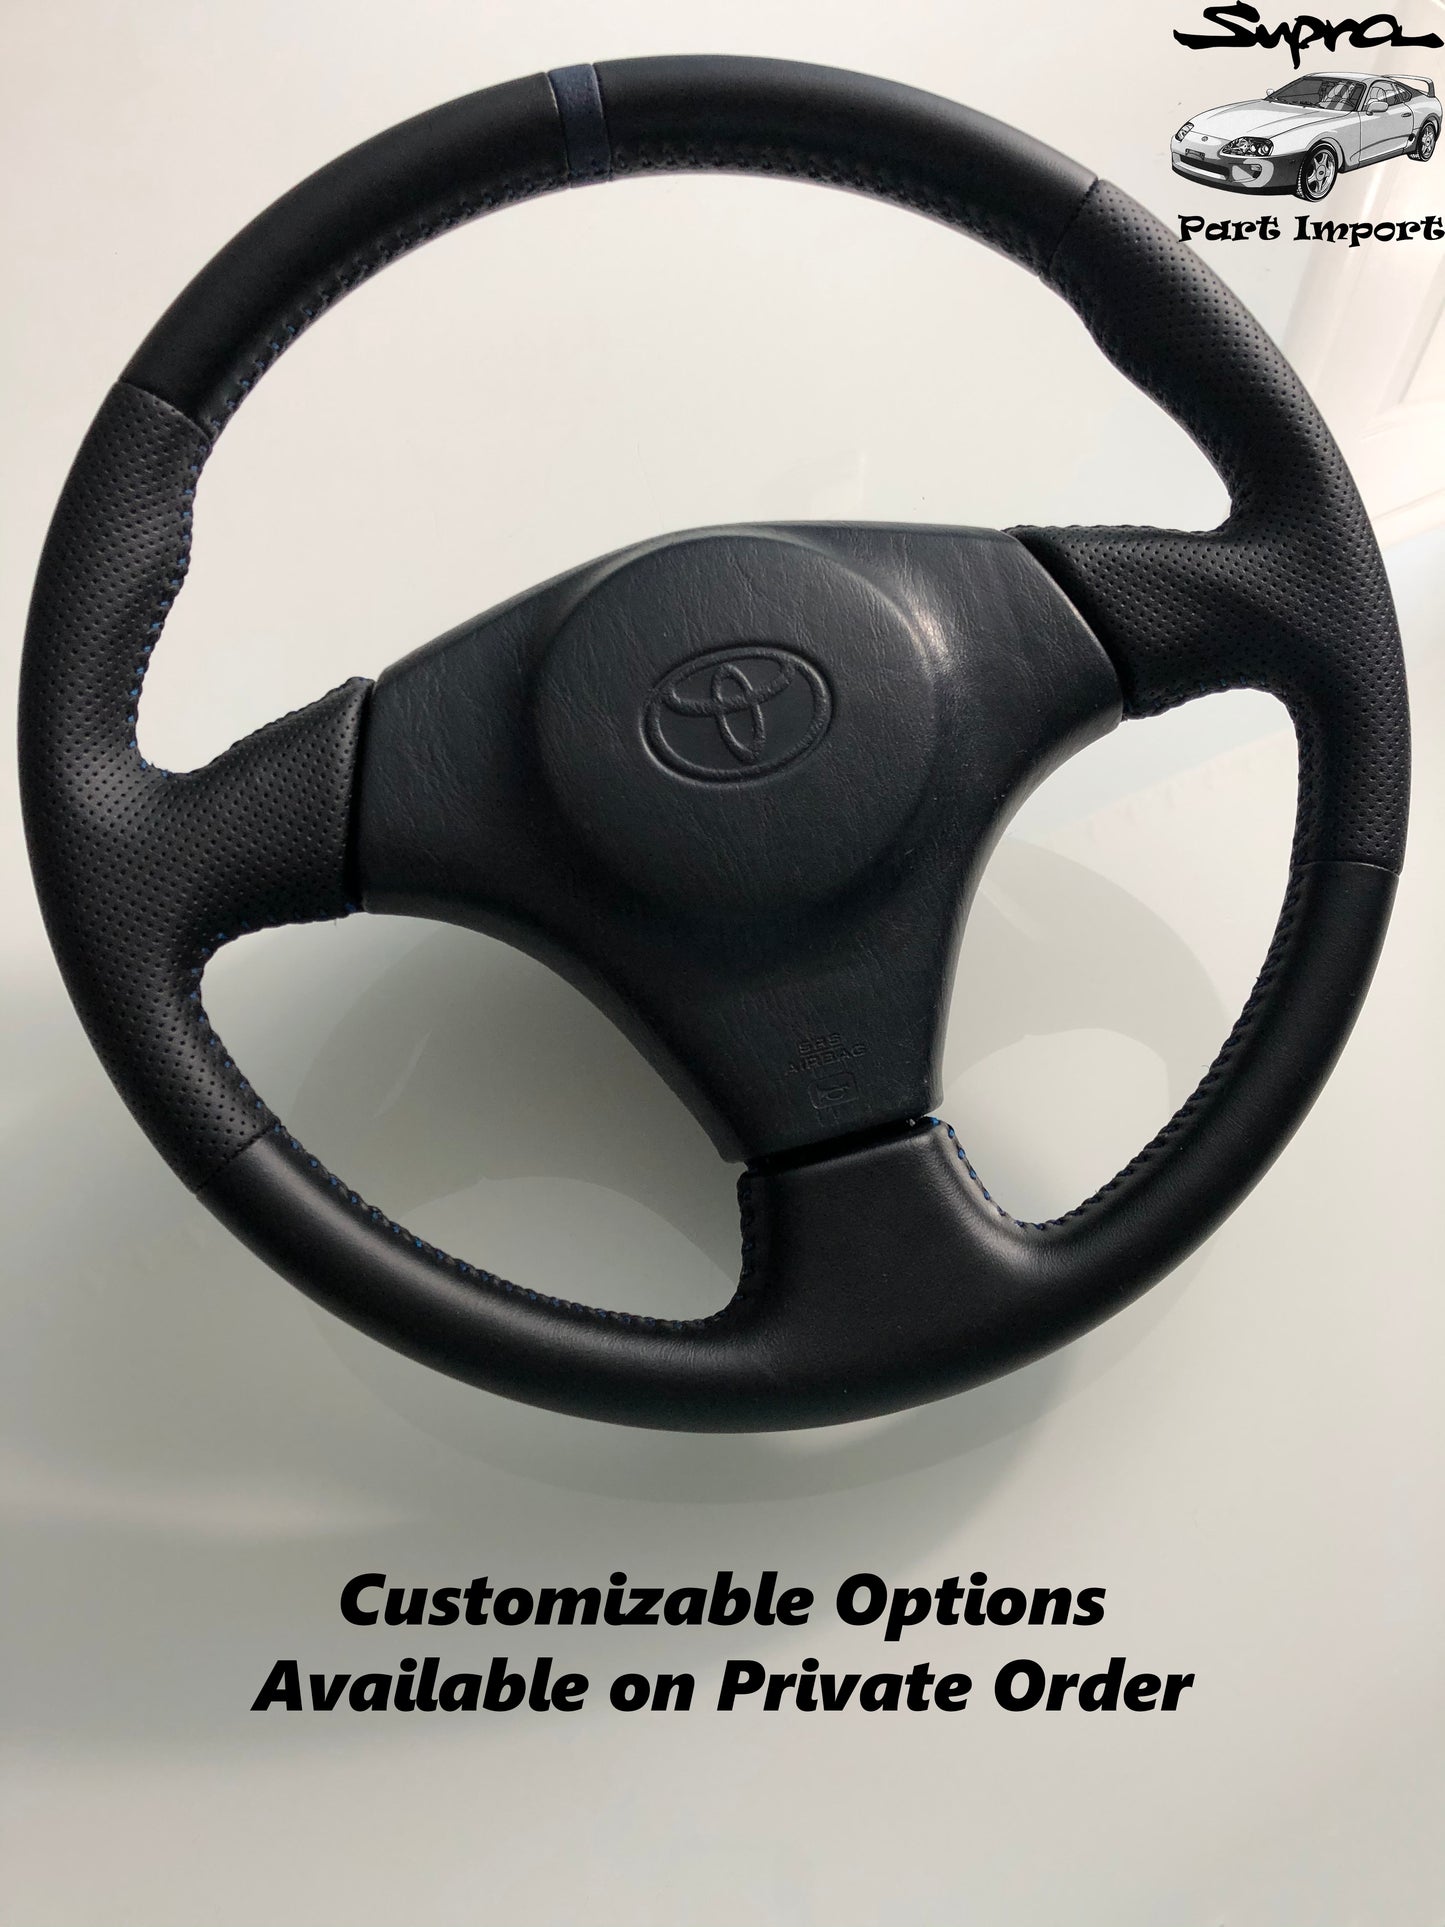 *TEMPORARILY DISCONTINUED* JZA80/MKIV Supra Restored Facelift Steering Wheel